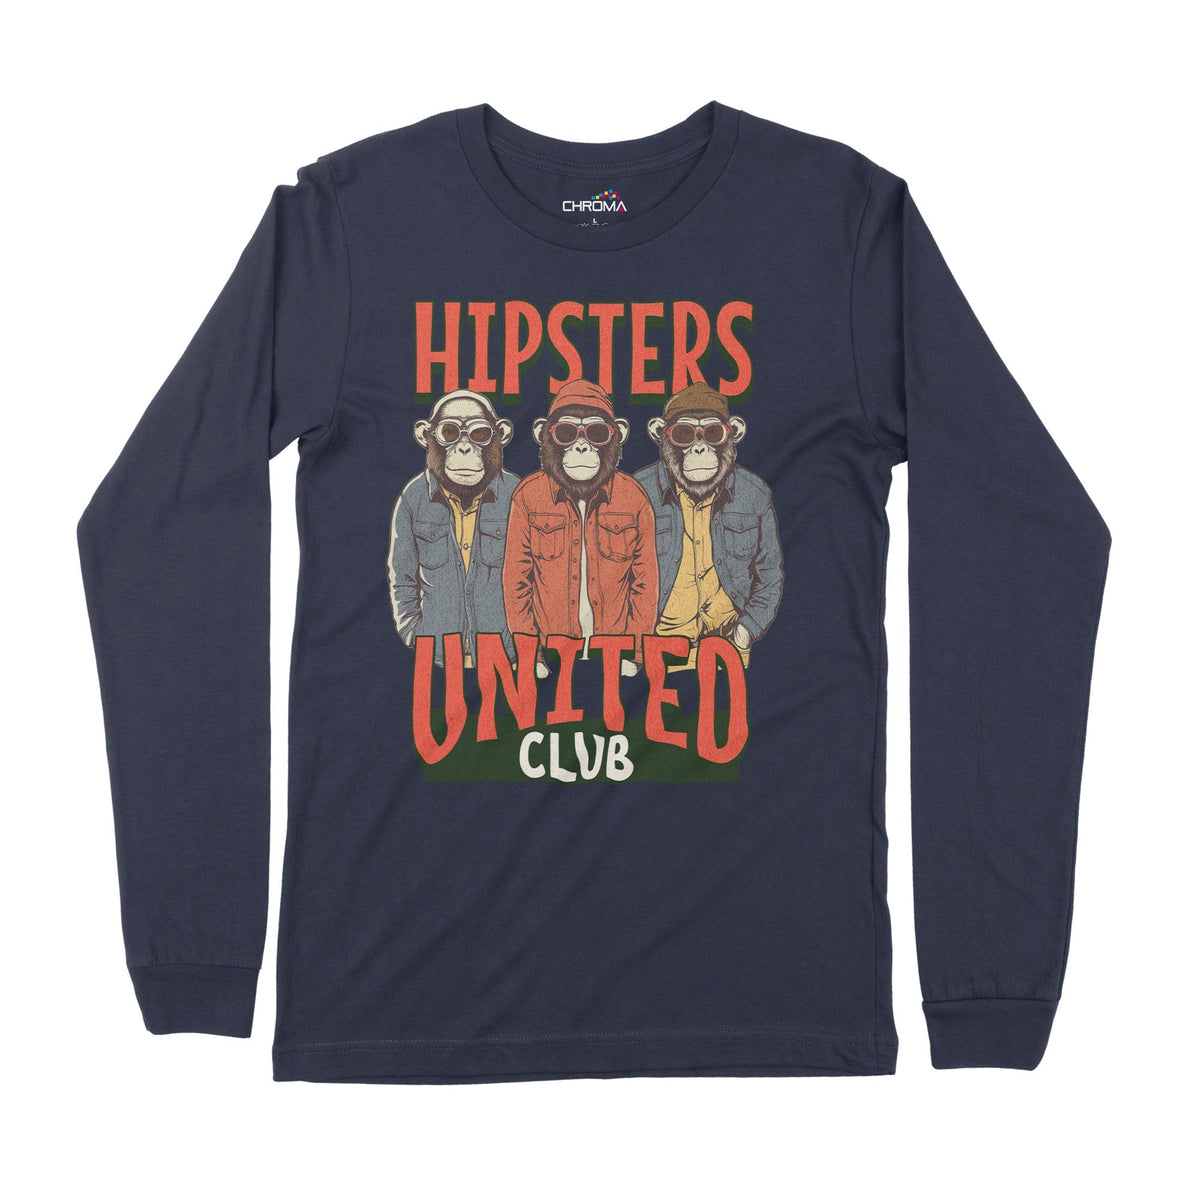 Hipsters United Club | Long-Sleeve T-Shirt | Premium Quality Streetwea Chroma Clothing